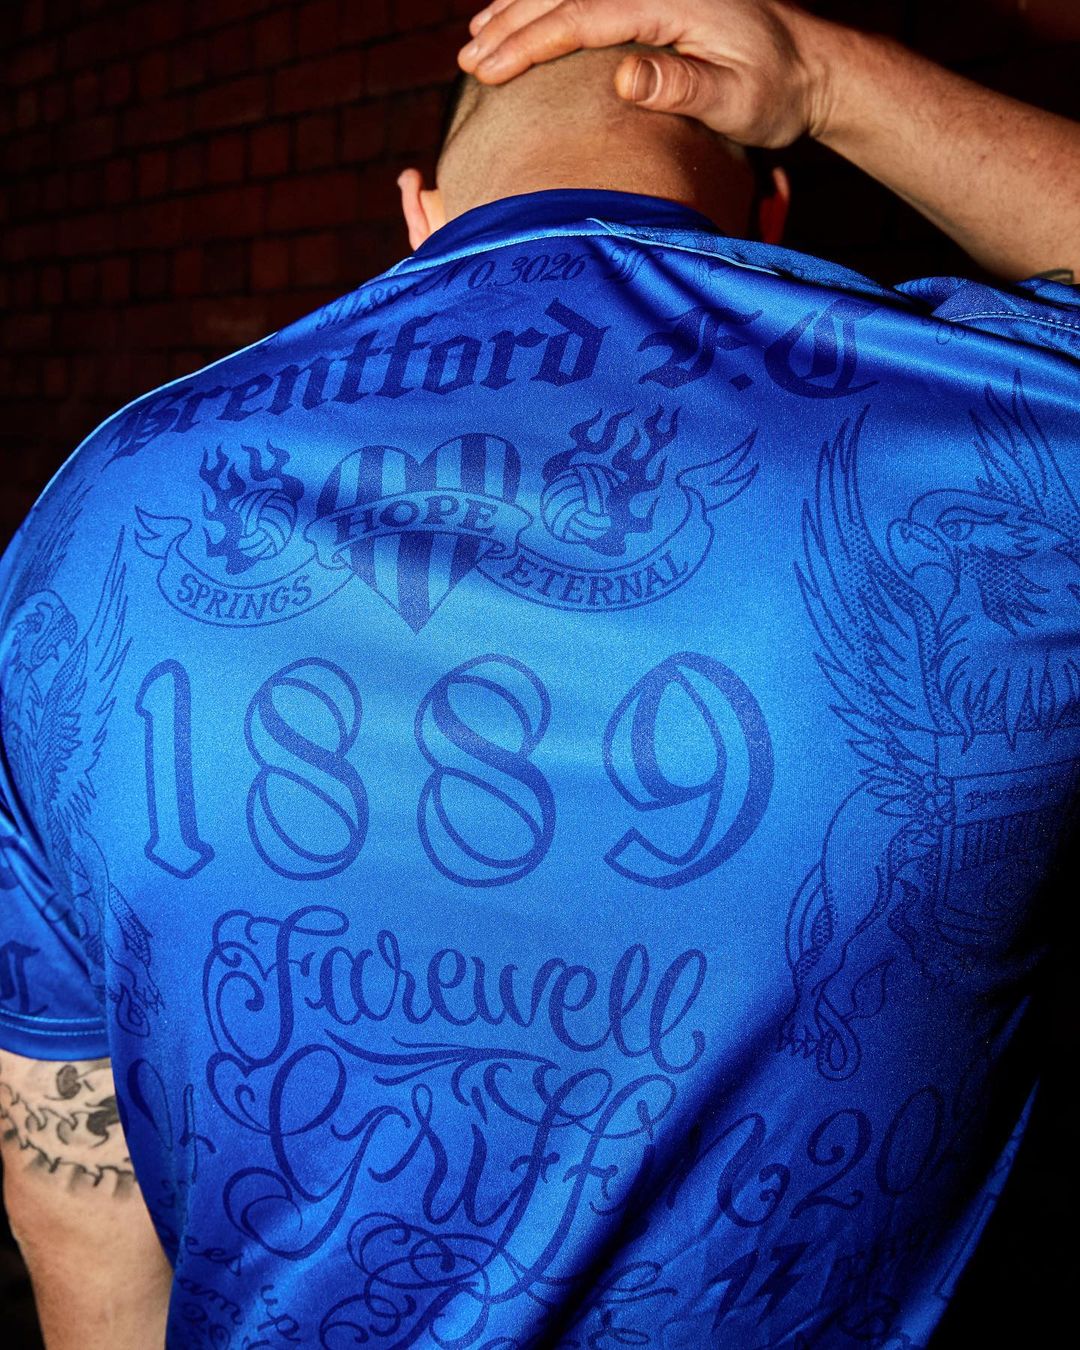 Tatoeages van Brenford FC fans op nieuwe warming-up shirts